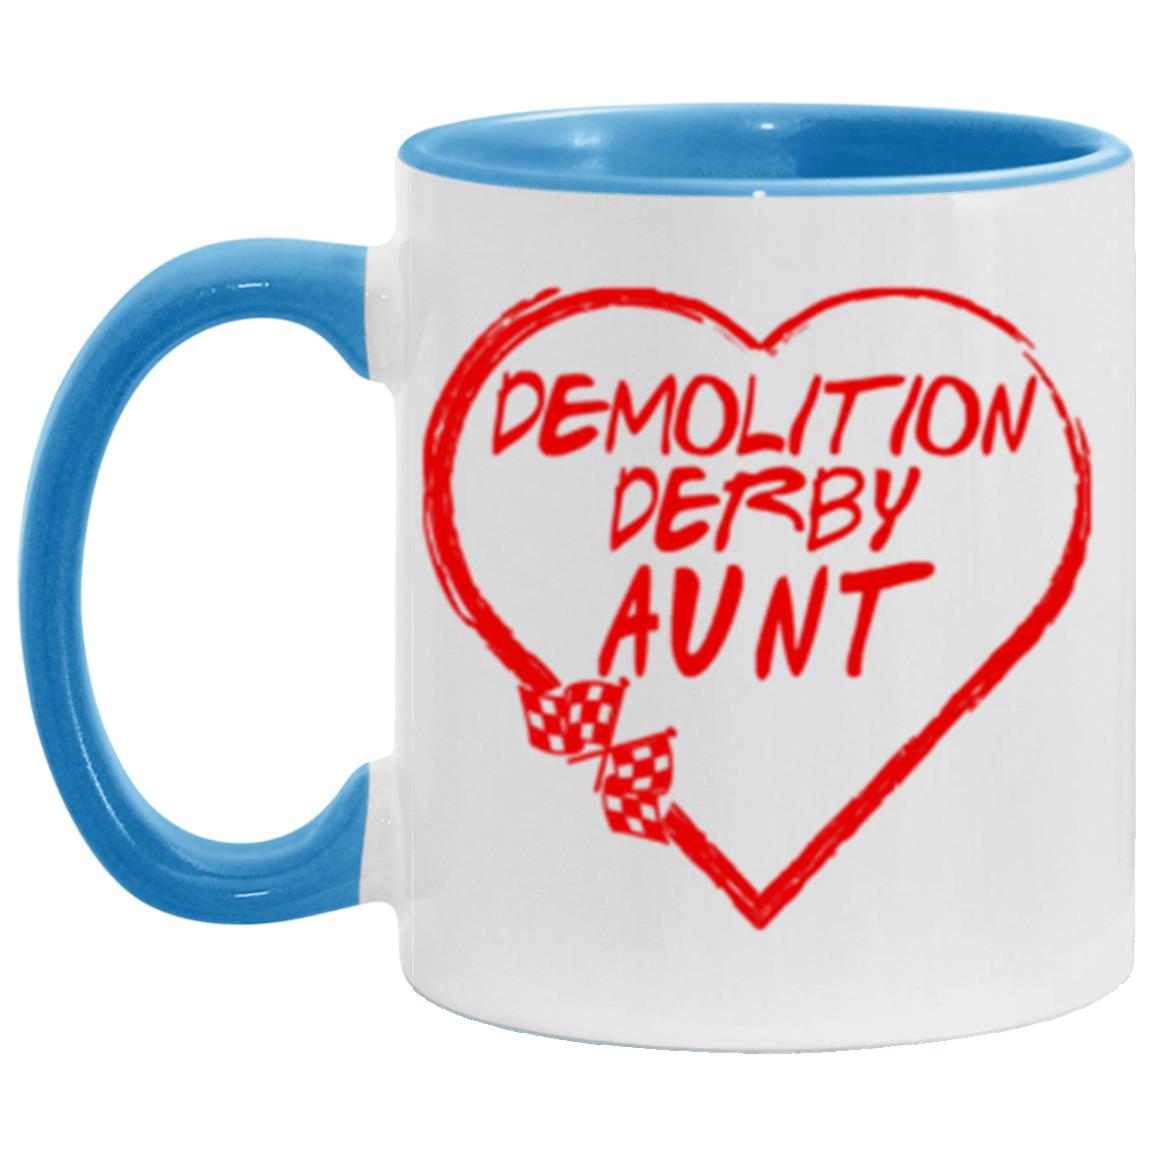 Demolition Derby Aunt Heart 11 oz. Accent Mug